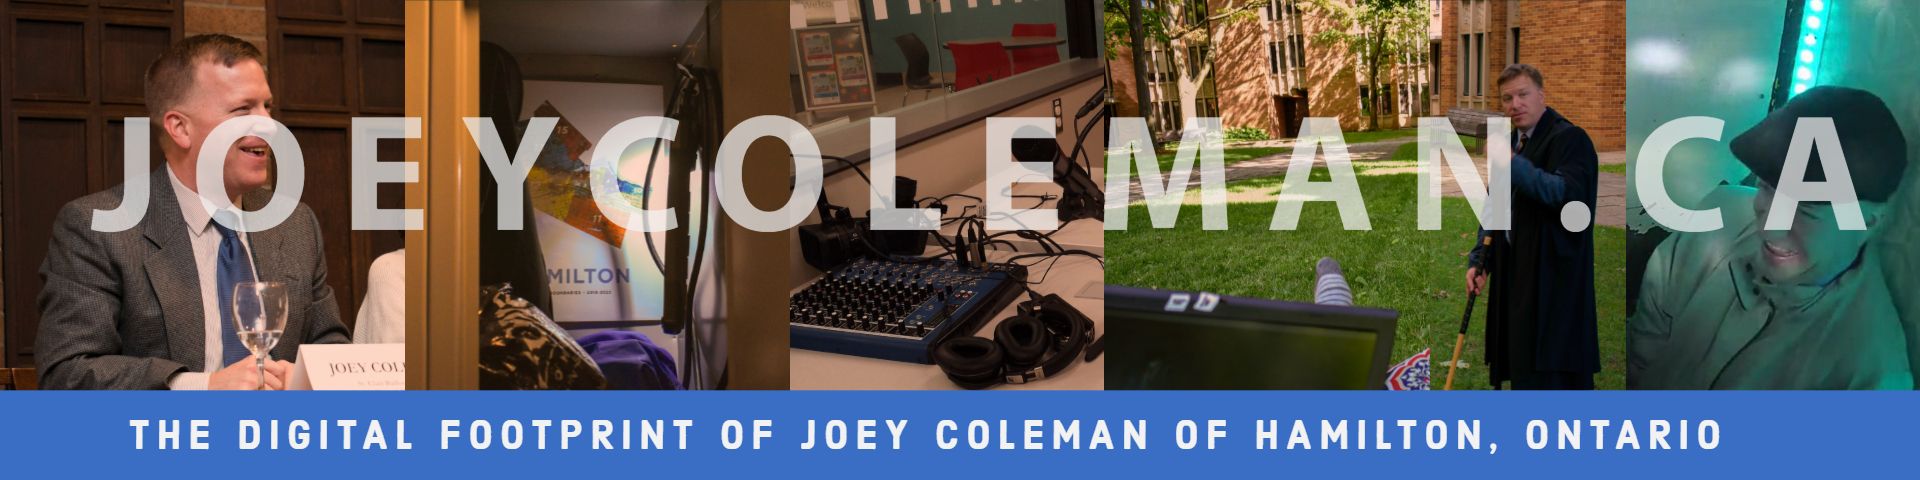 JoeyColeman.ca - the personal website of Joey Coleman of Hamilton, Ontario